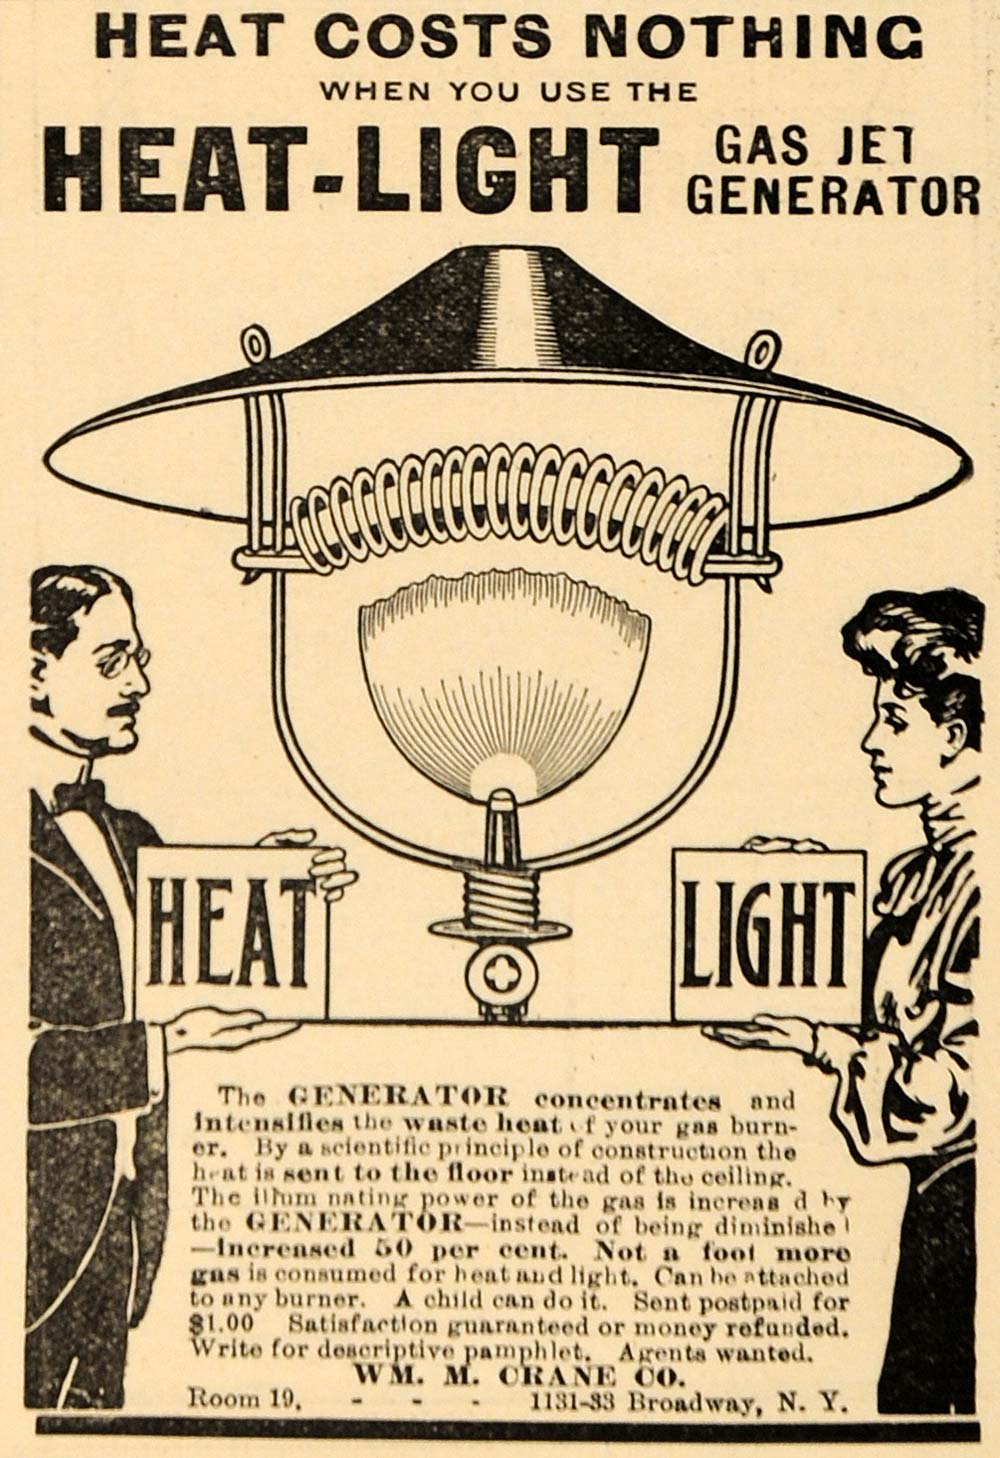 1905 Ad Wm. M. Crane Co. Heat-light Gas Jet Generator - ORIGINAL GUN1